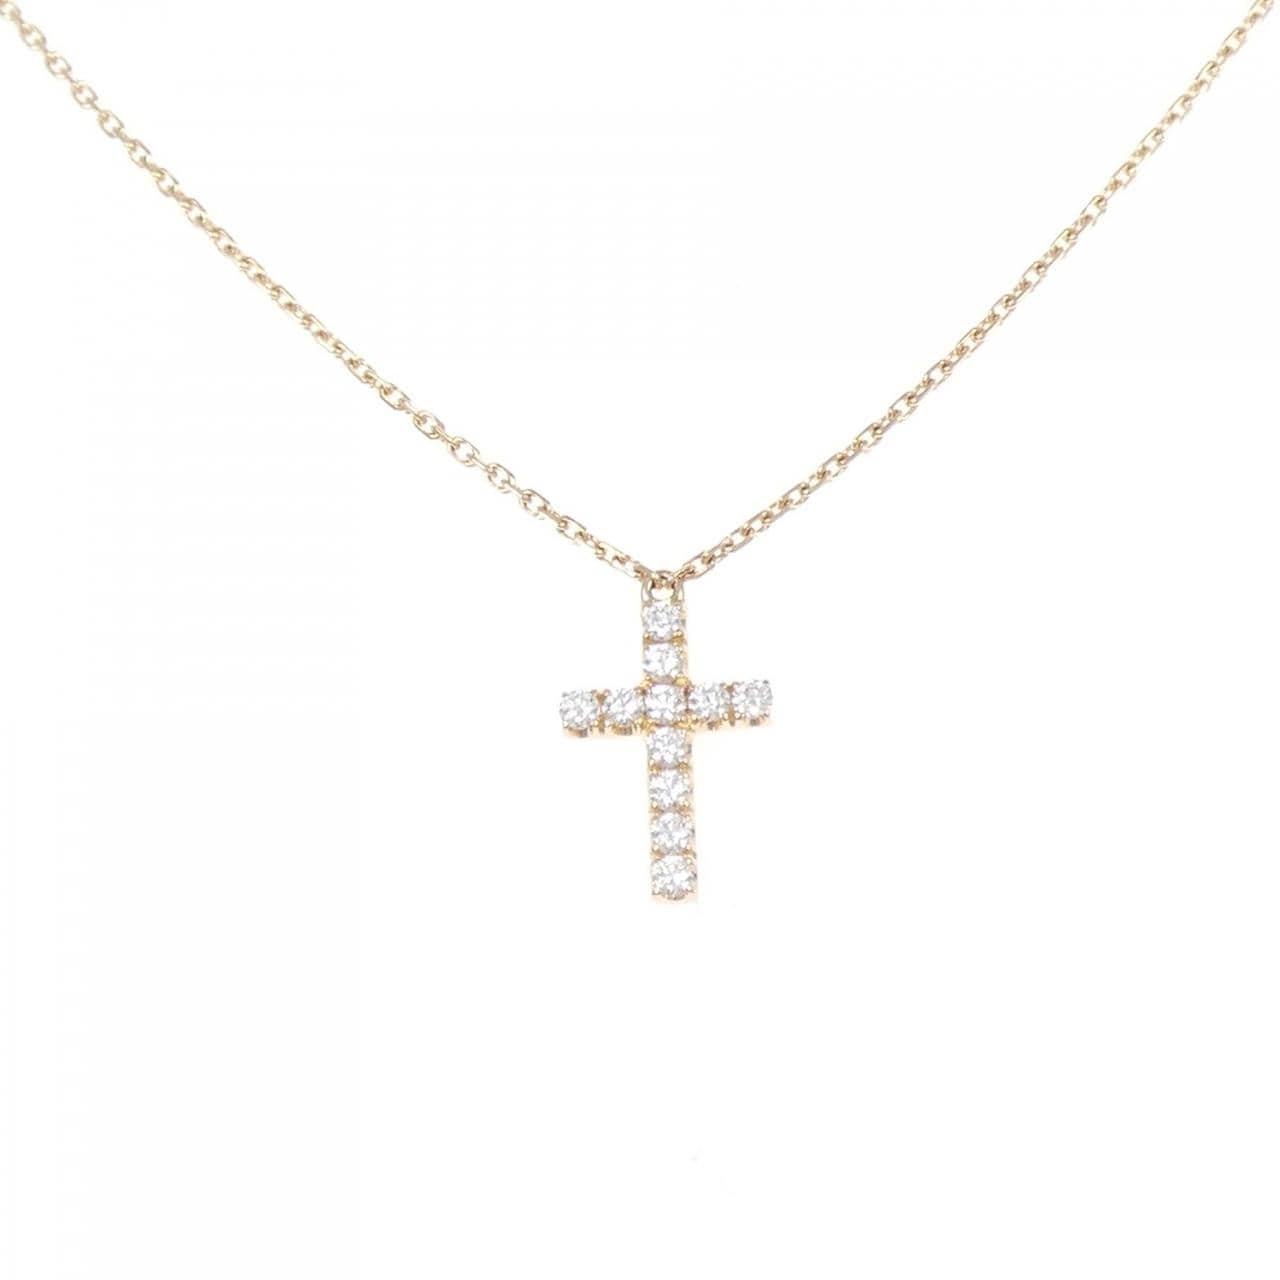 CRB7221700 - Symbols necklace - White gold, diamonds - Cartier